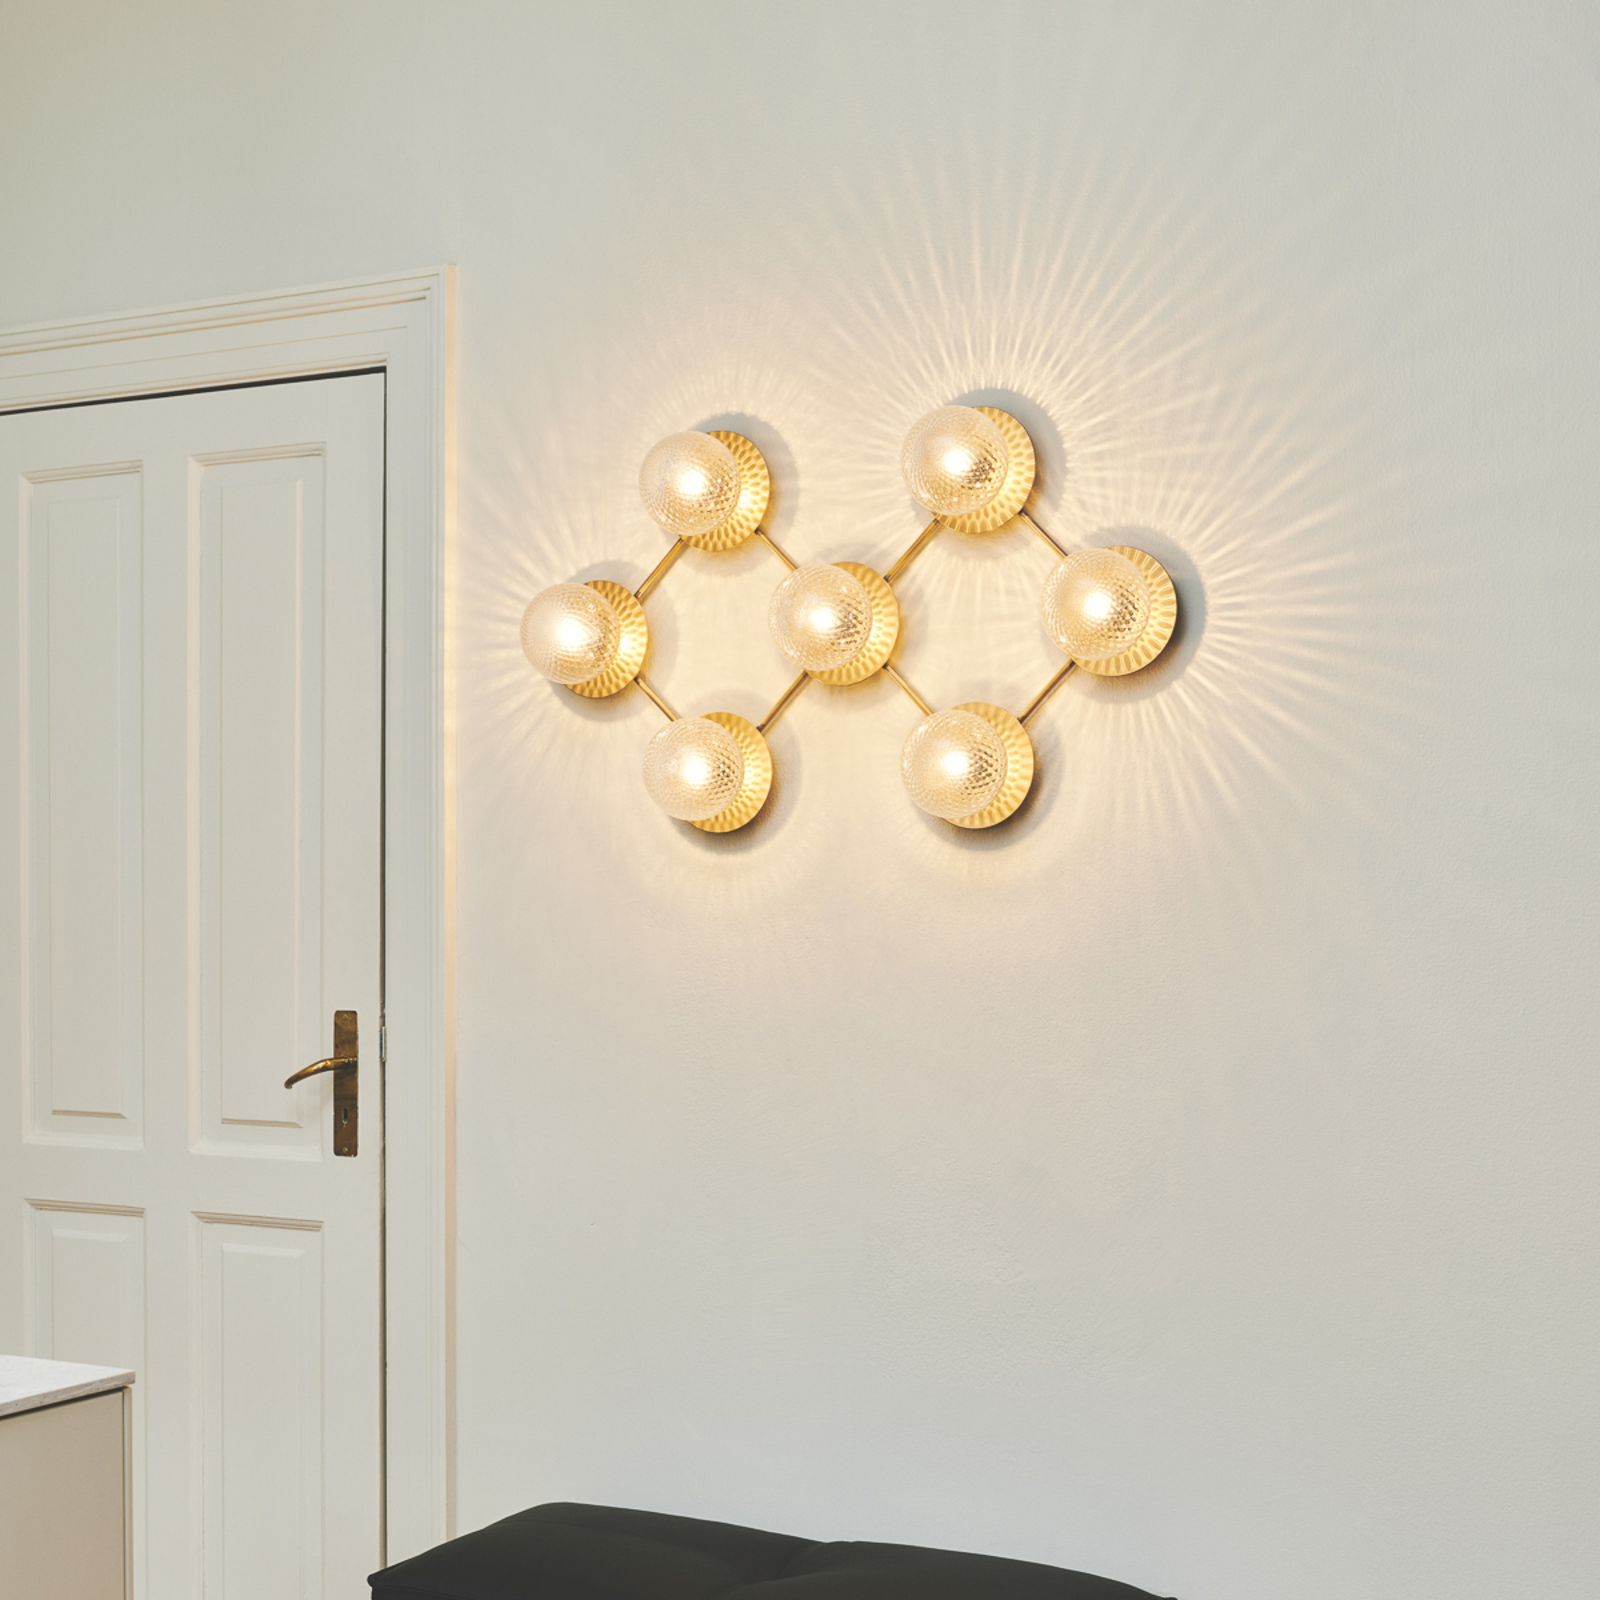 Nuura Liila 7 wall light 7-bulb gold/clear